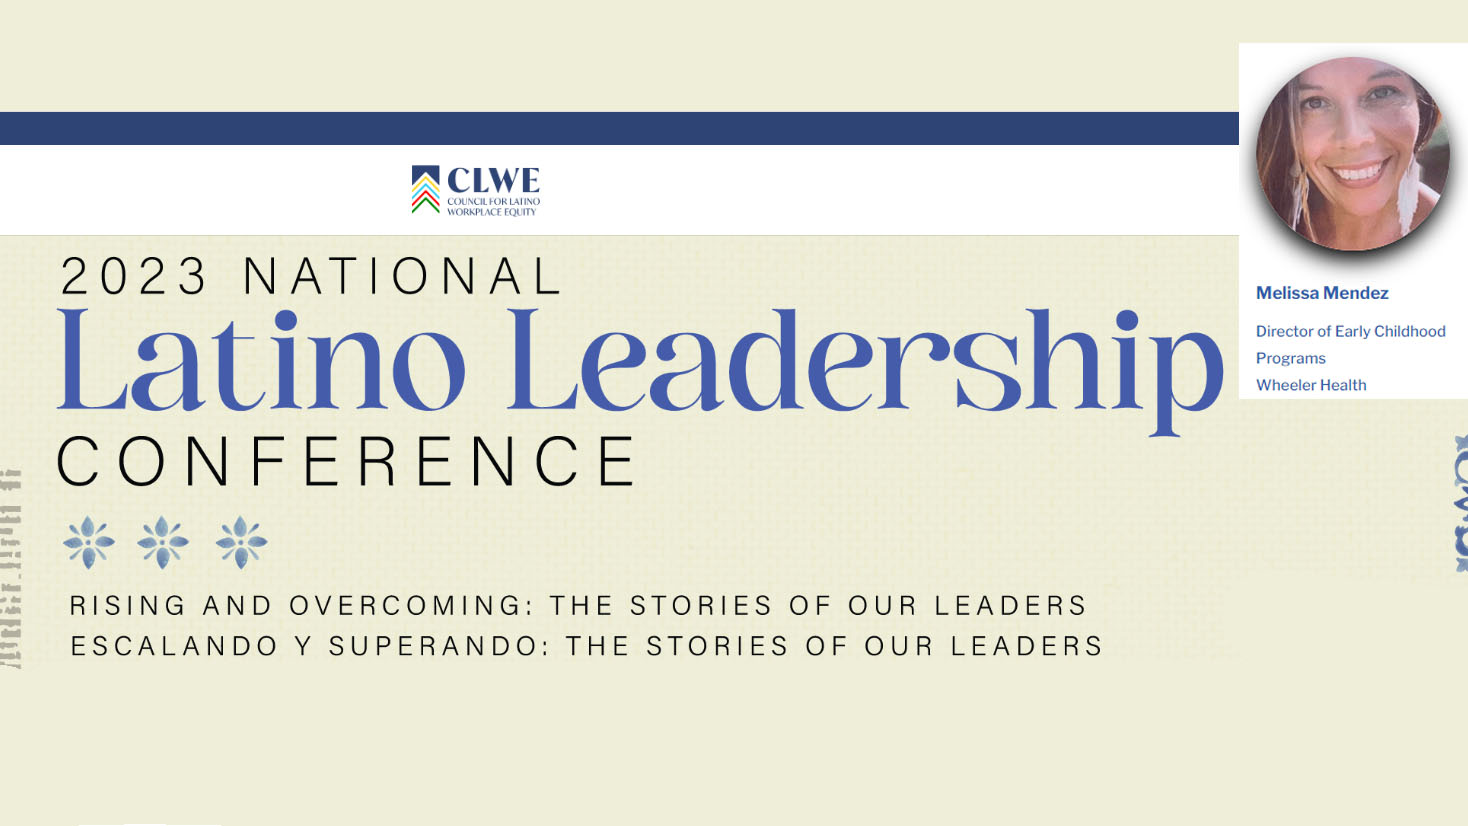 Melissa Mendez presents at the National Latino Leadership Conference